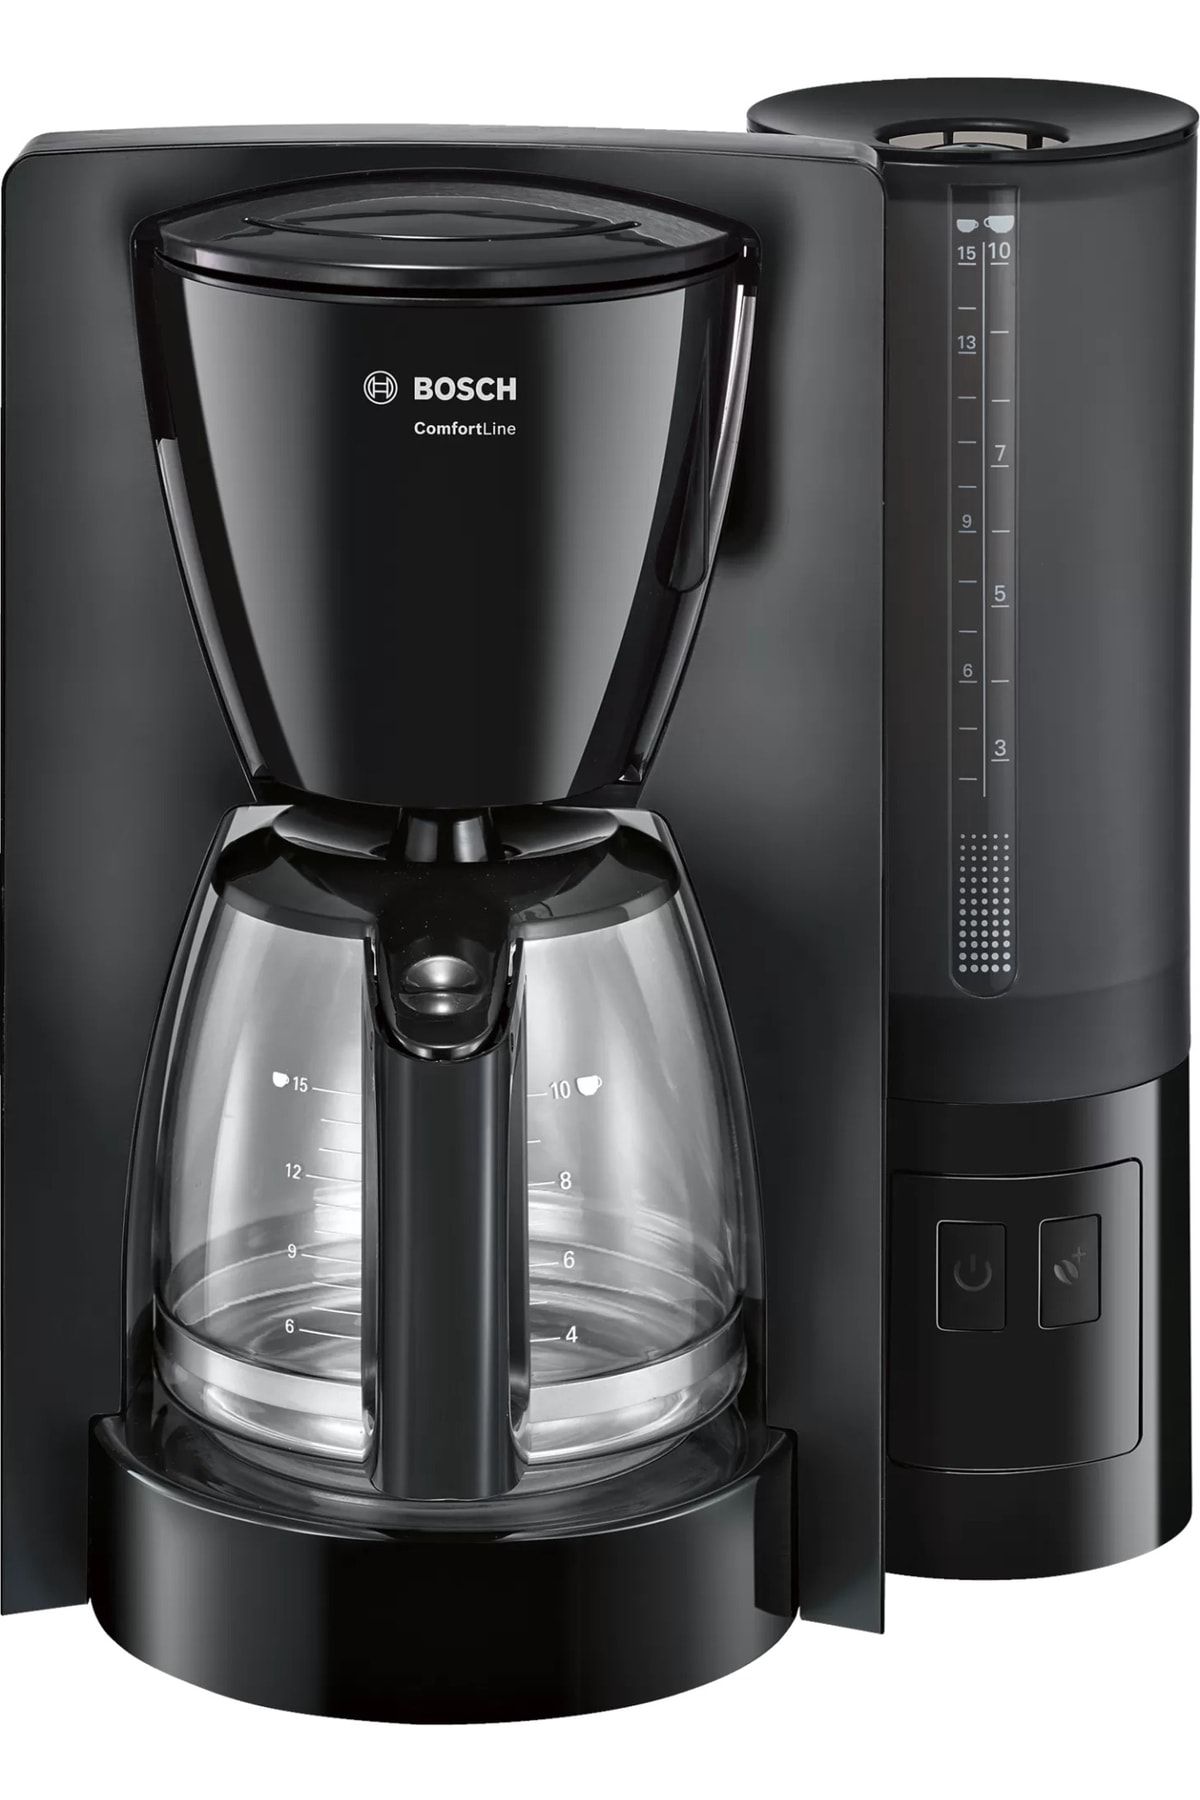 Bosch Comfortline 1200 W, 1250ml Filtre Kahve Makinesi, Siyah